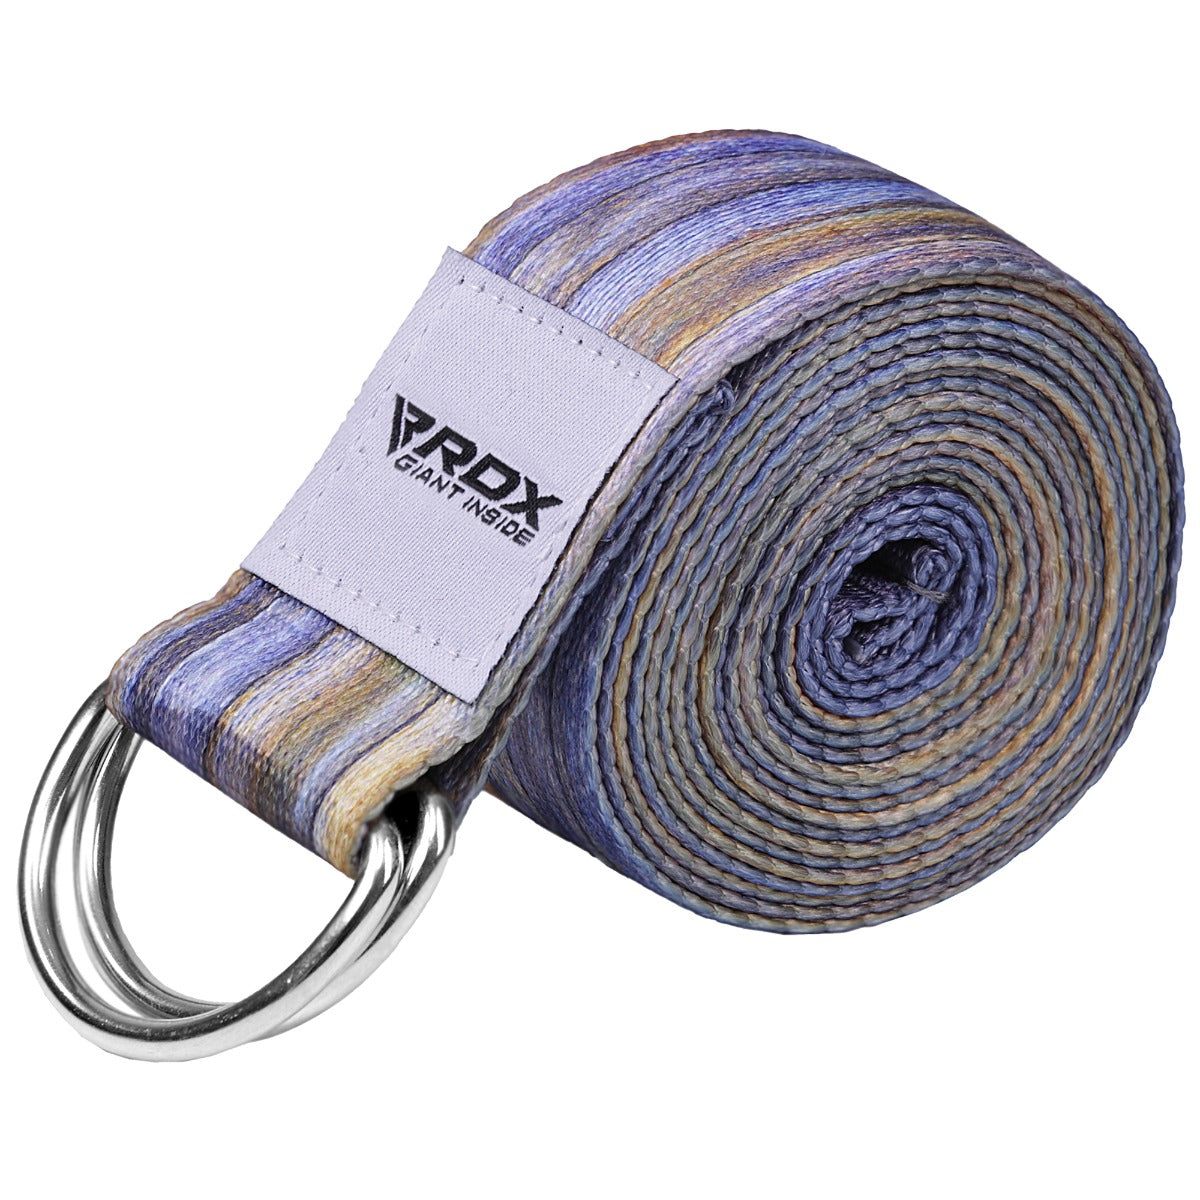 Blue The Yogis Adjustable Yoga Mat Strap Sling Belt for Carrying